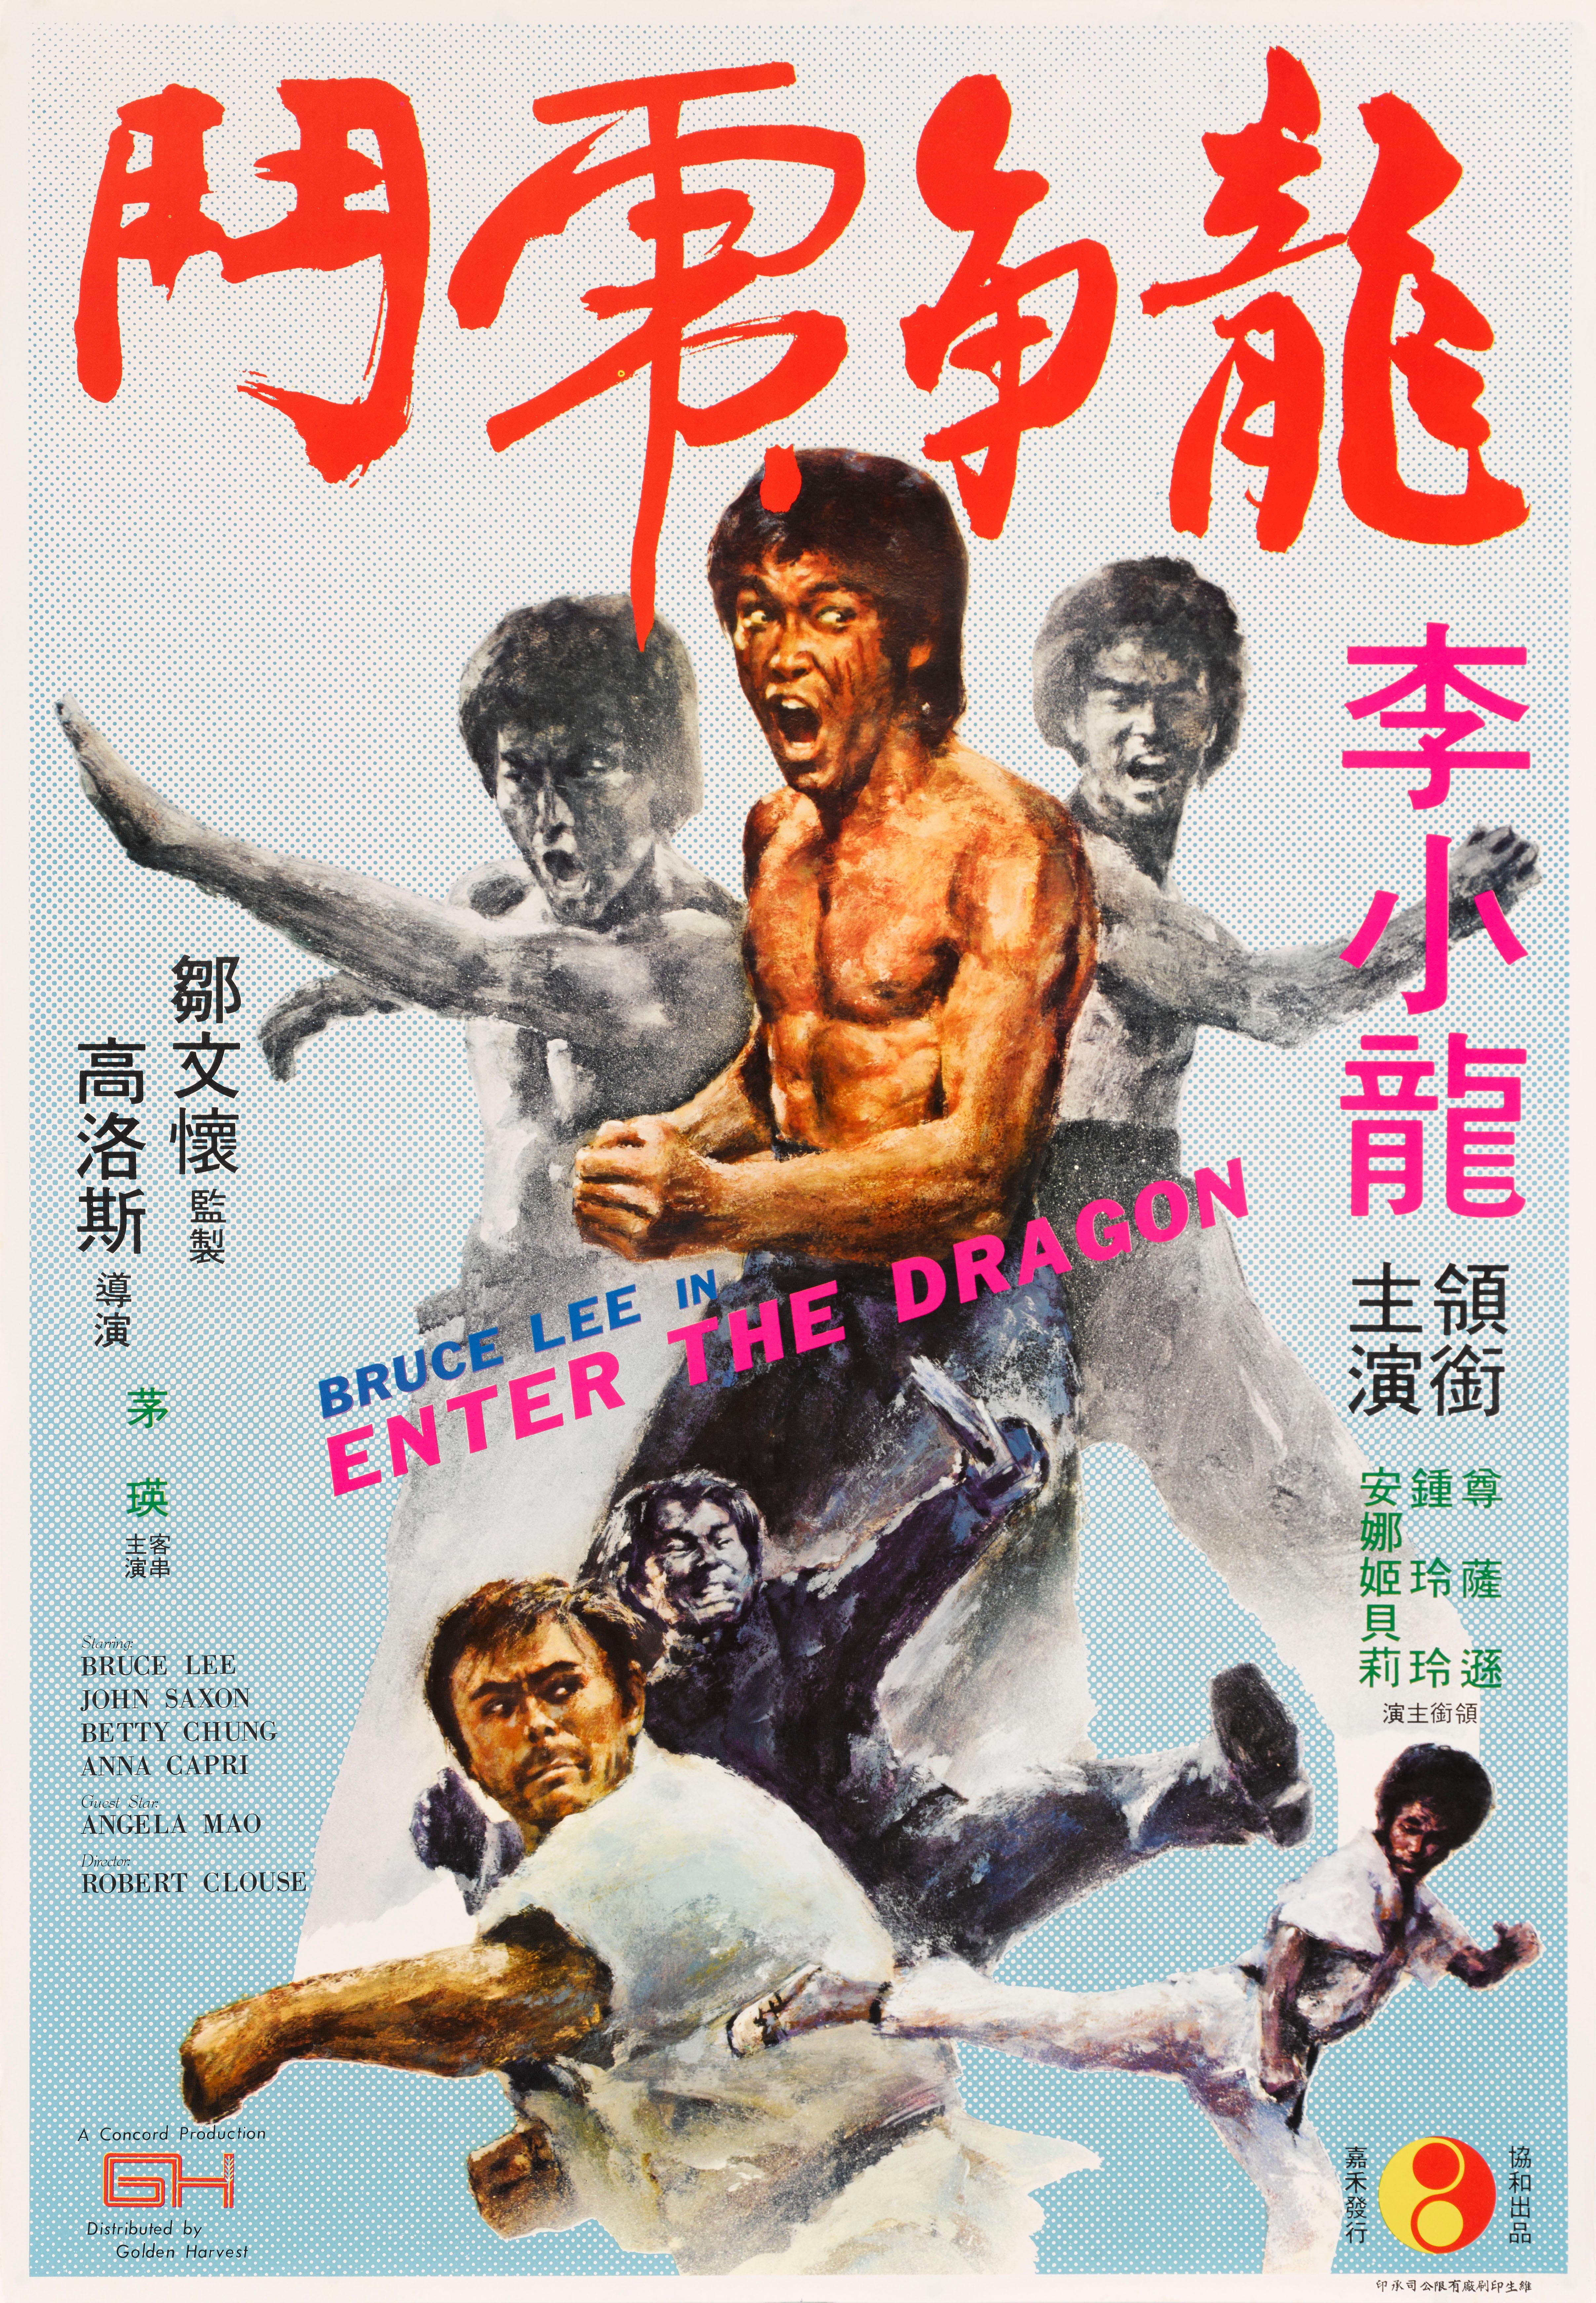 Original Hong Kong film poster for Bruce Lees legendary 1973 martial arts film starring Bruce Lee, John Saxon, Jim Kelly and directed by Robert Clouse.